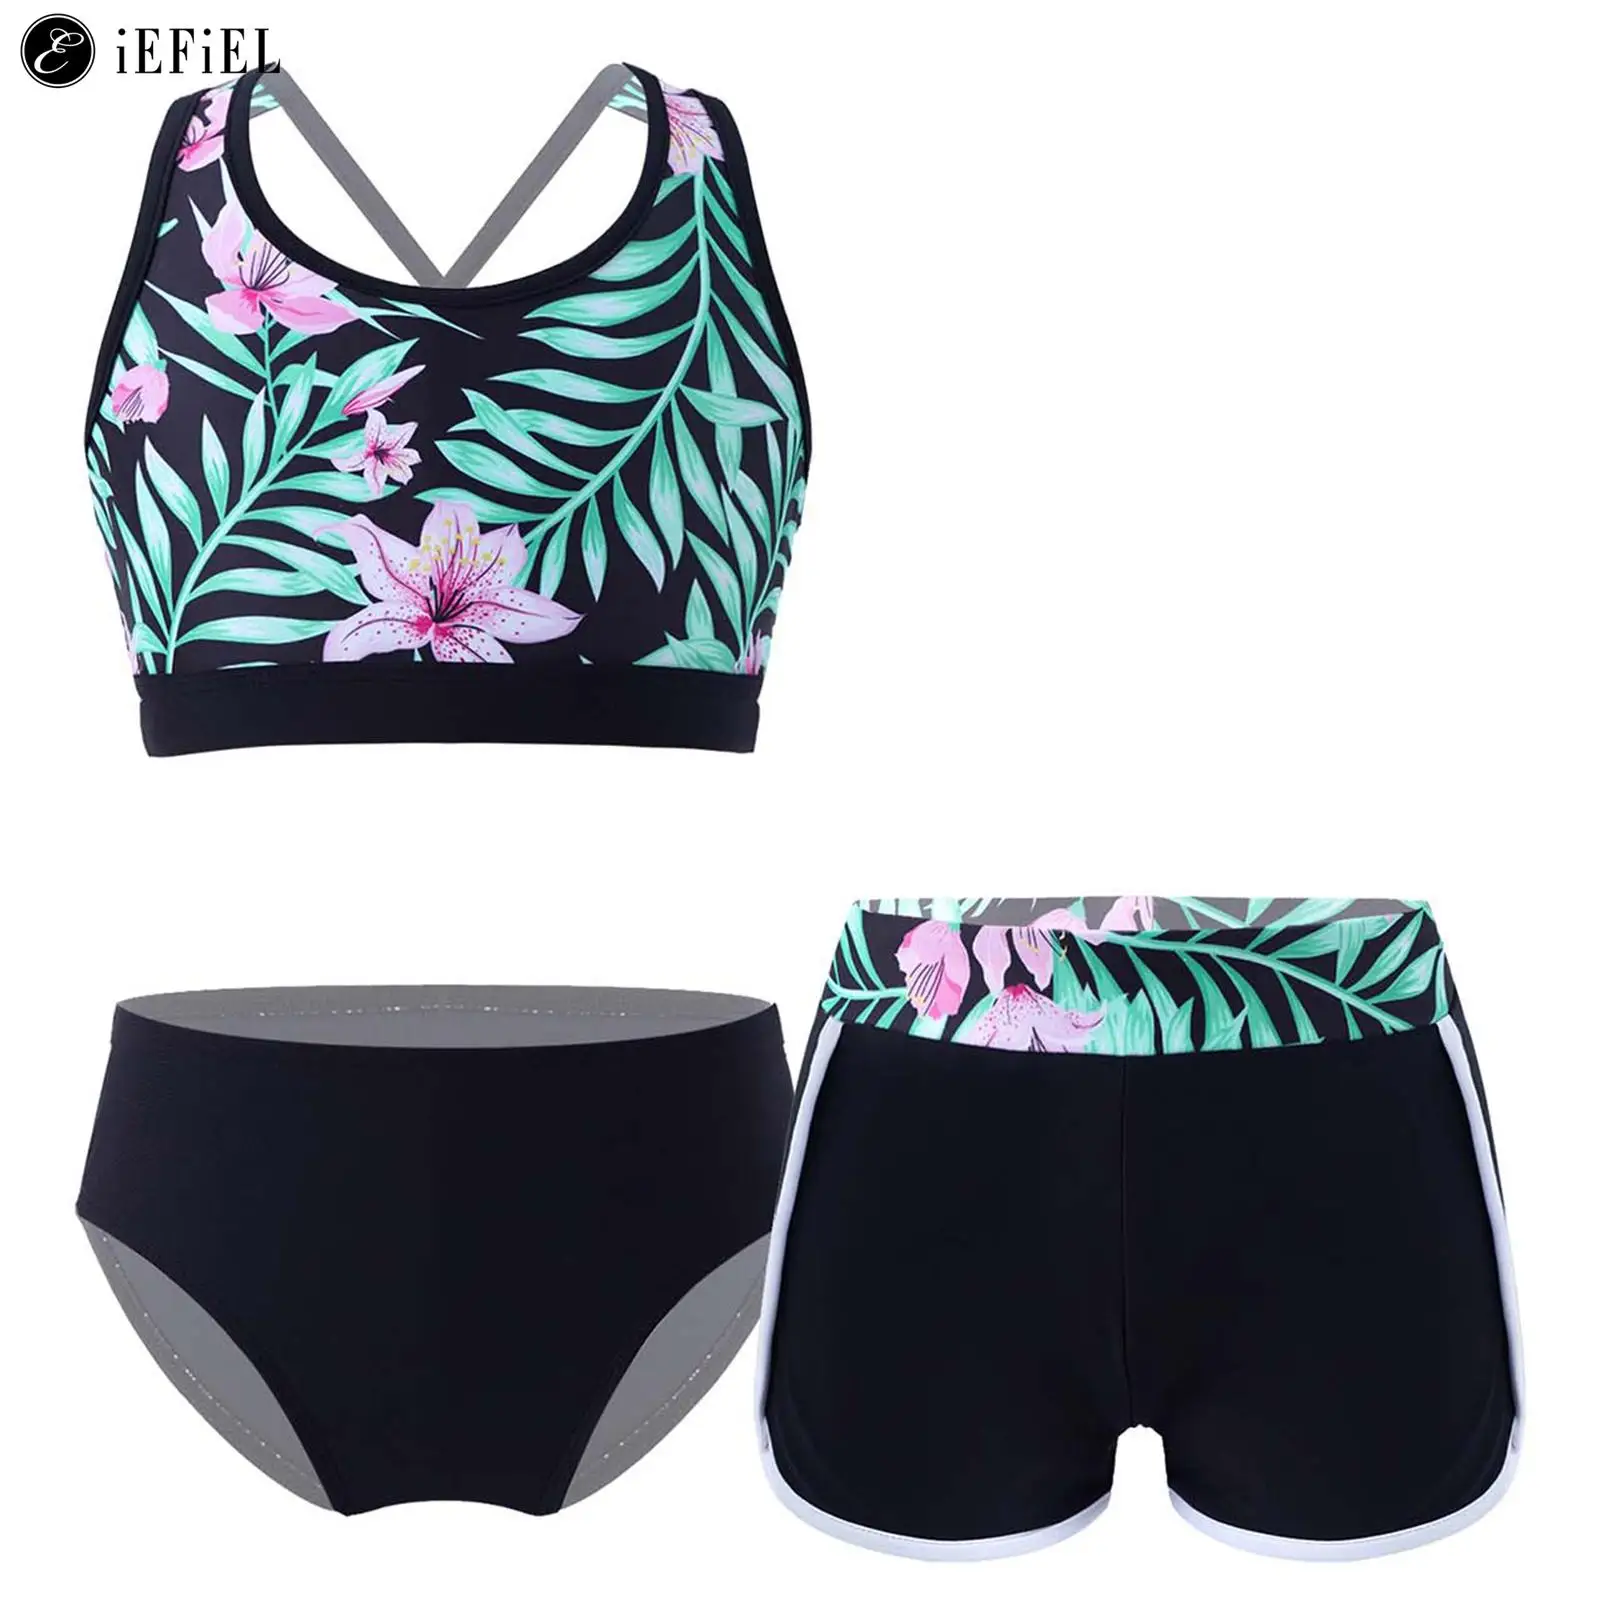 

Kids Girls 3 Pieces Tankini Set Floral Print Criss Cross Back Crop Tops with Boyshort Bottoms Beach Sport Swimwear Bathing Suit